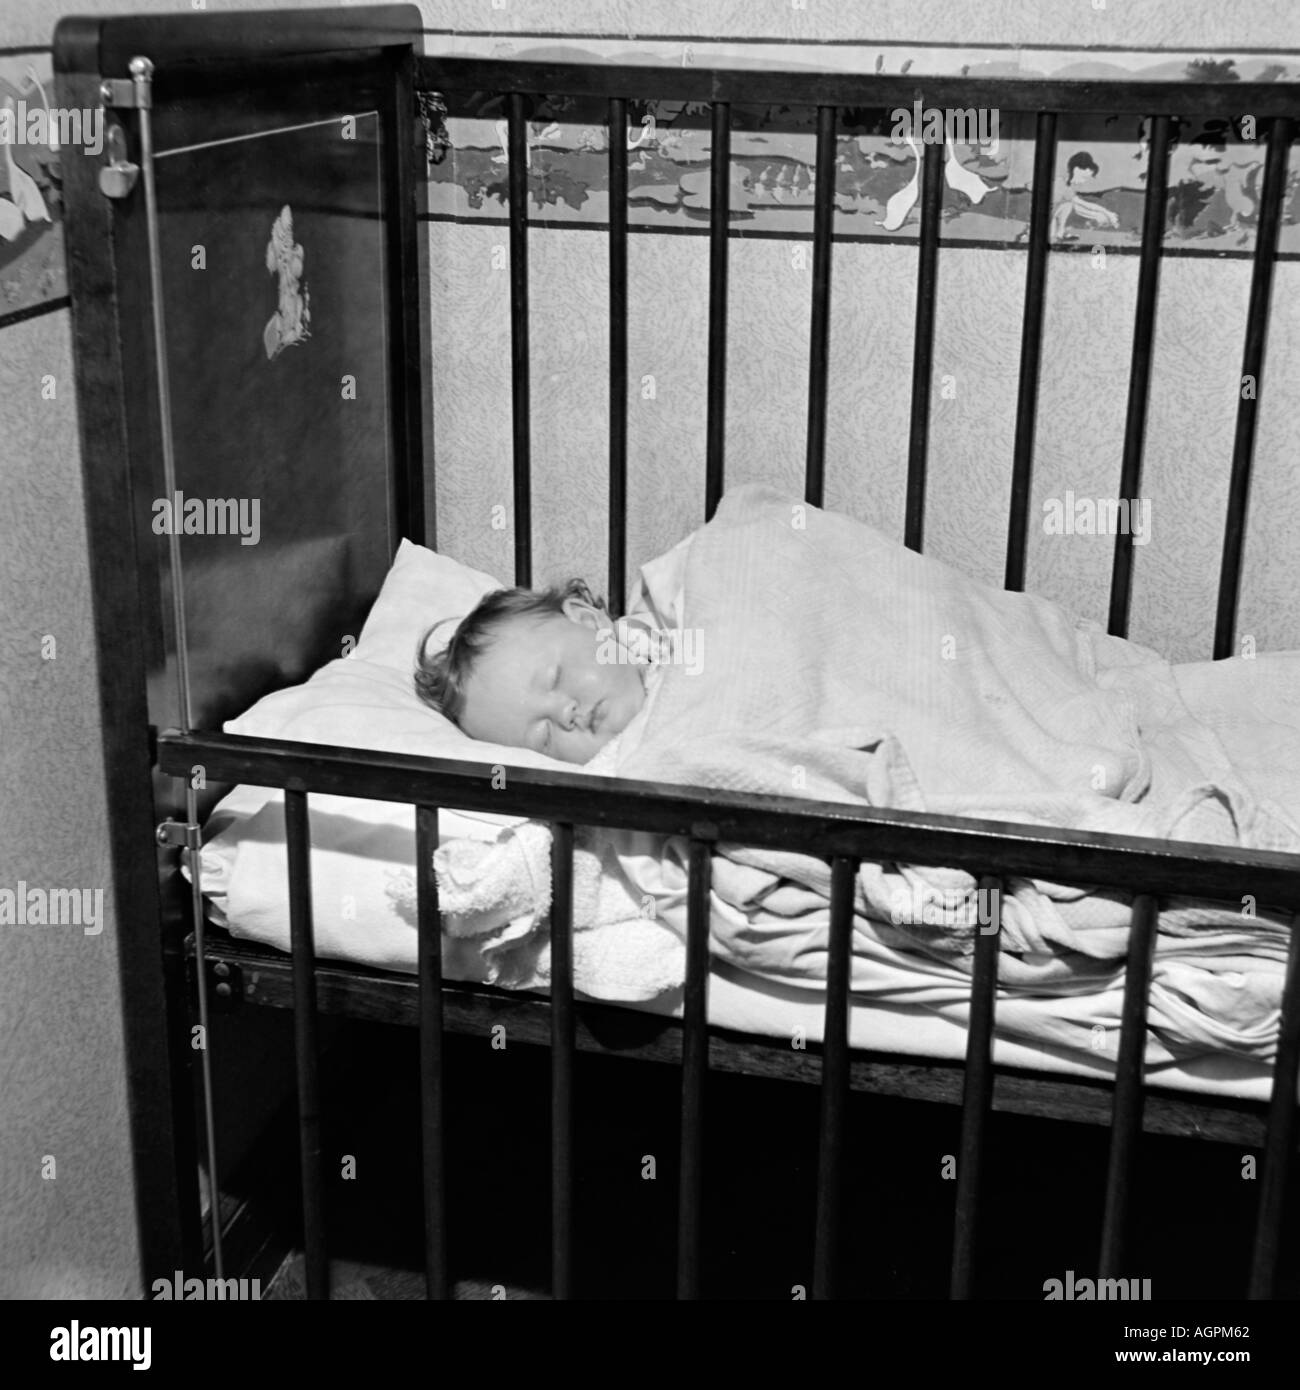 OLD VINTAGE PHOTO DE FAMILLE INSTANTANÉ BABY GIRL SLEEPING IN NURSERY Lit bébé Banque D'Images